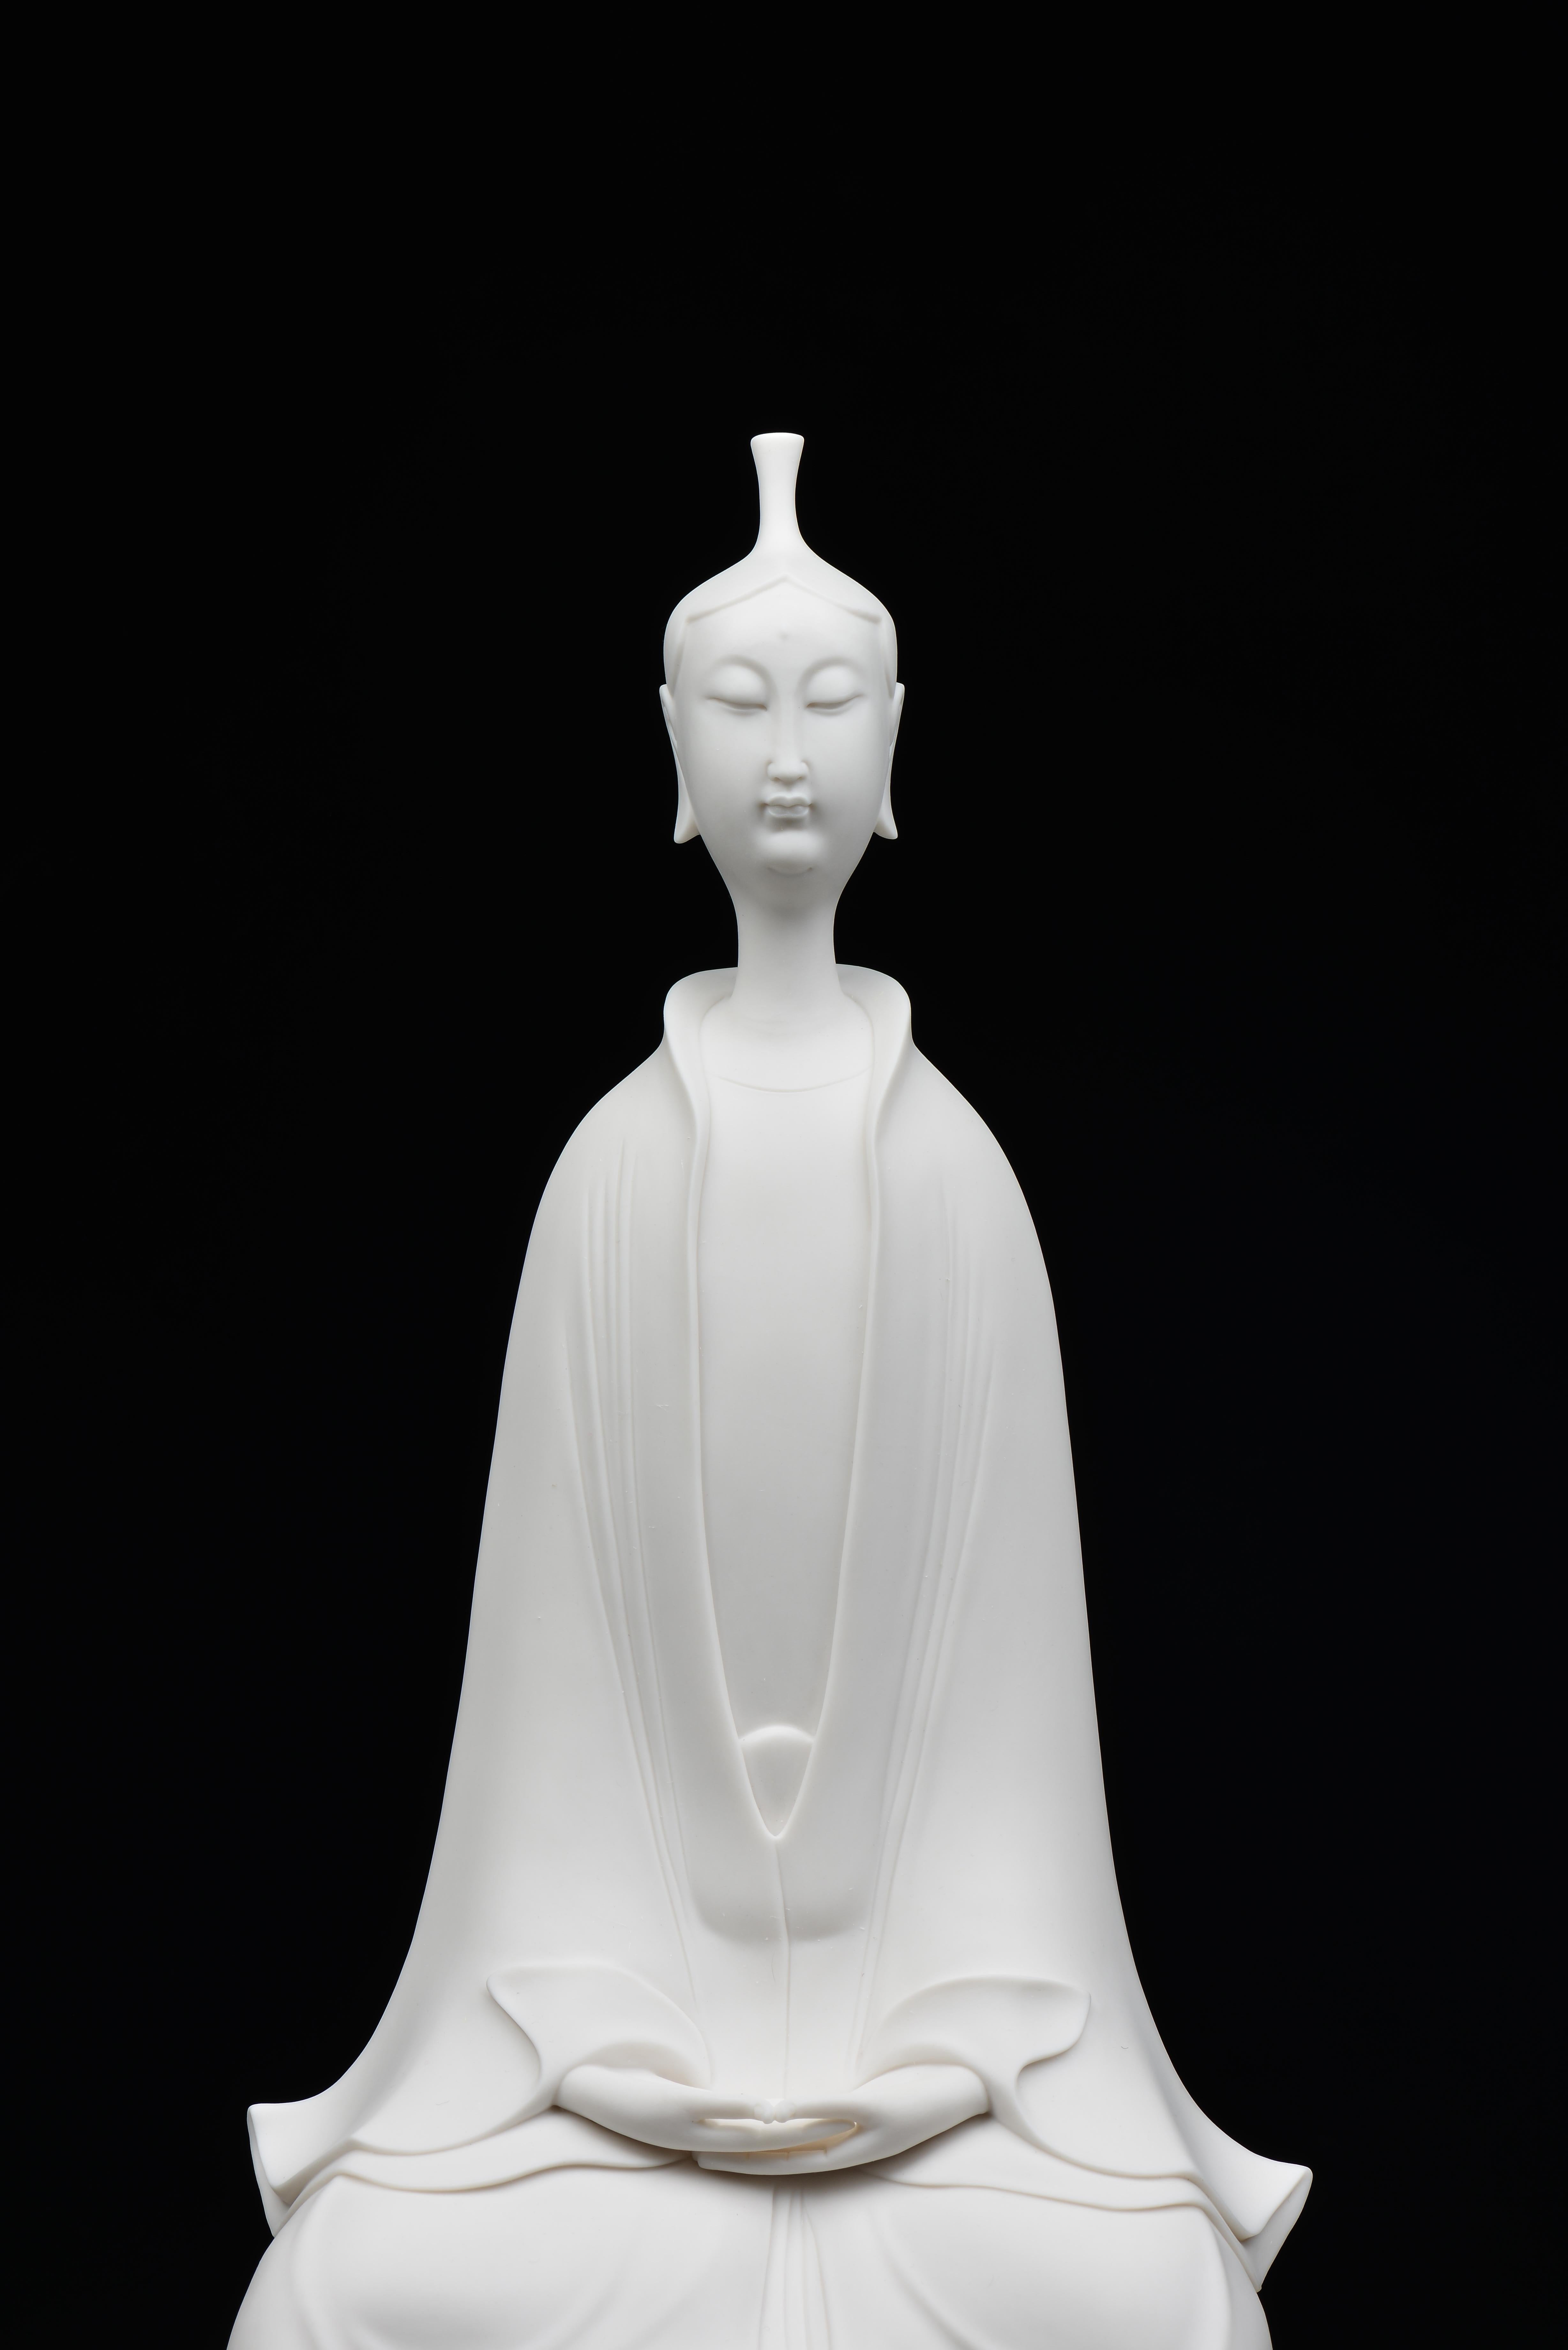 Updo Avalokitesvara in Meditation - Sculpture by JIANG SHENG